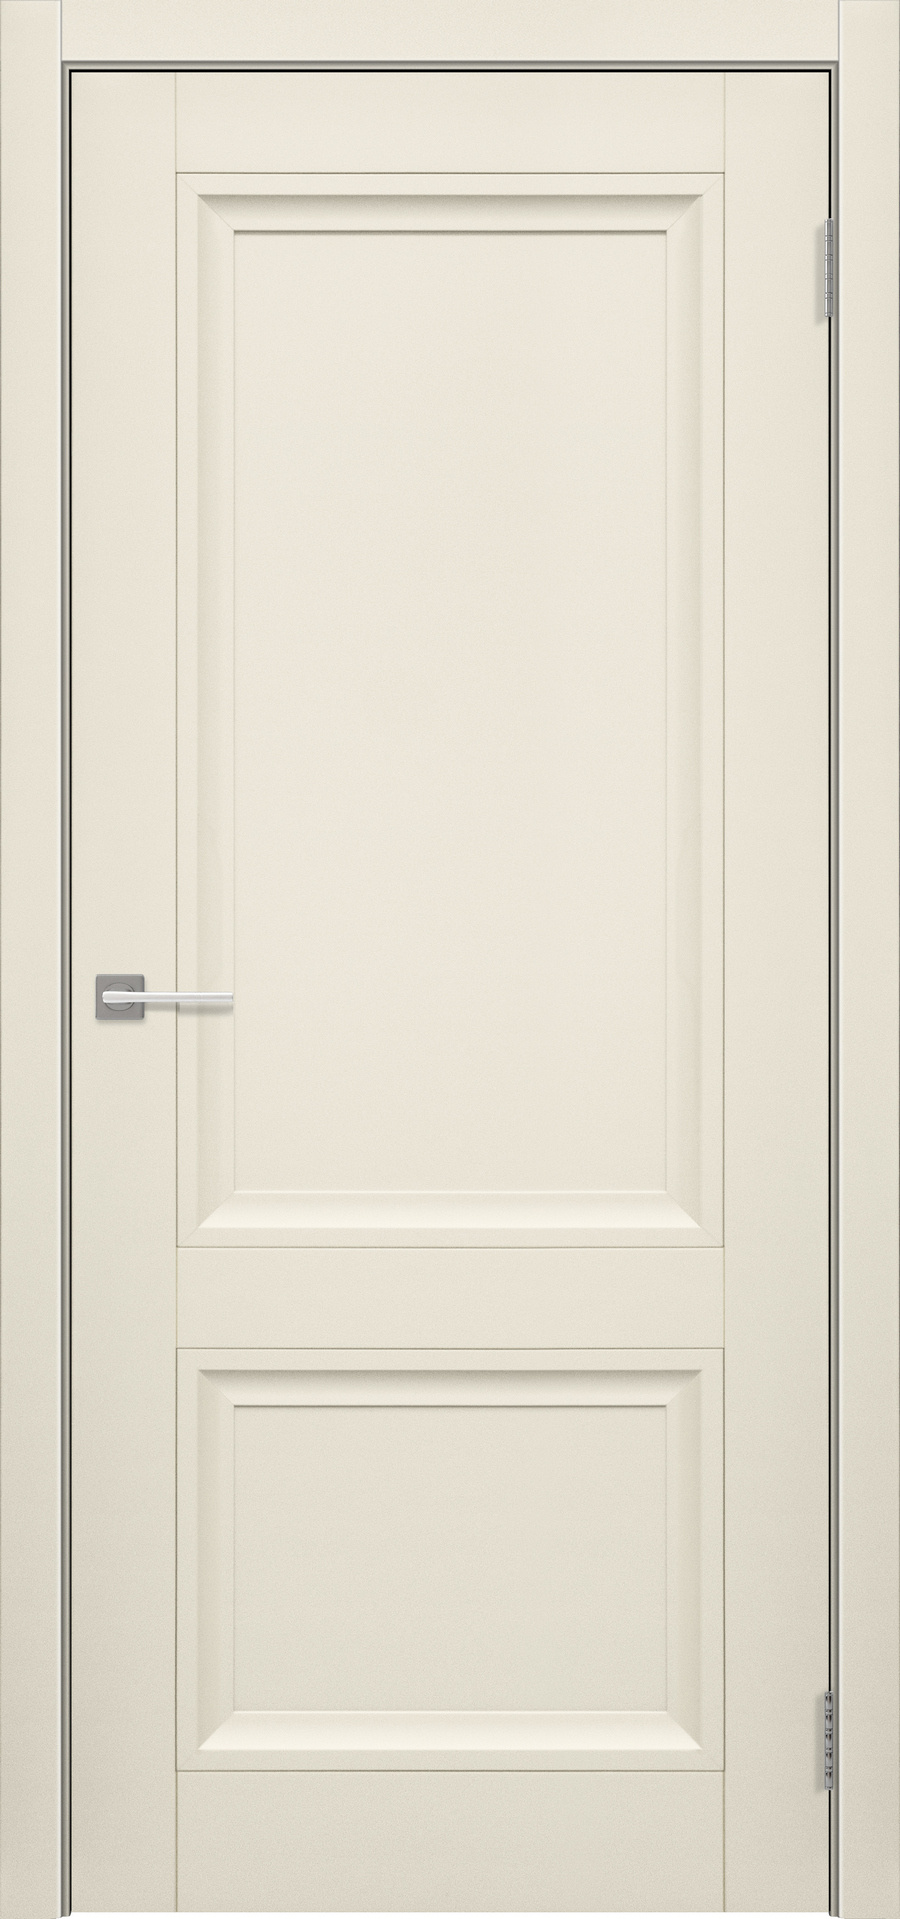 Тандор Межкомнатная дверь Орион 2 ПГ, арт. 30589 - фото №1